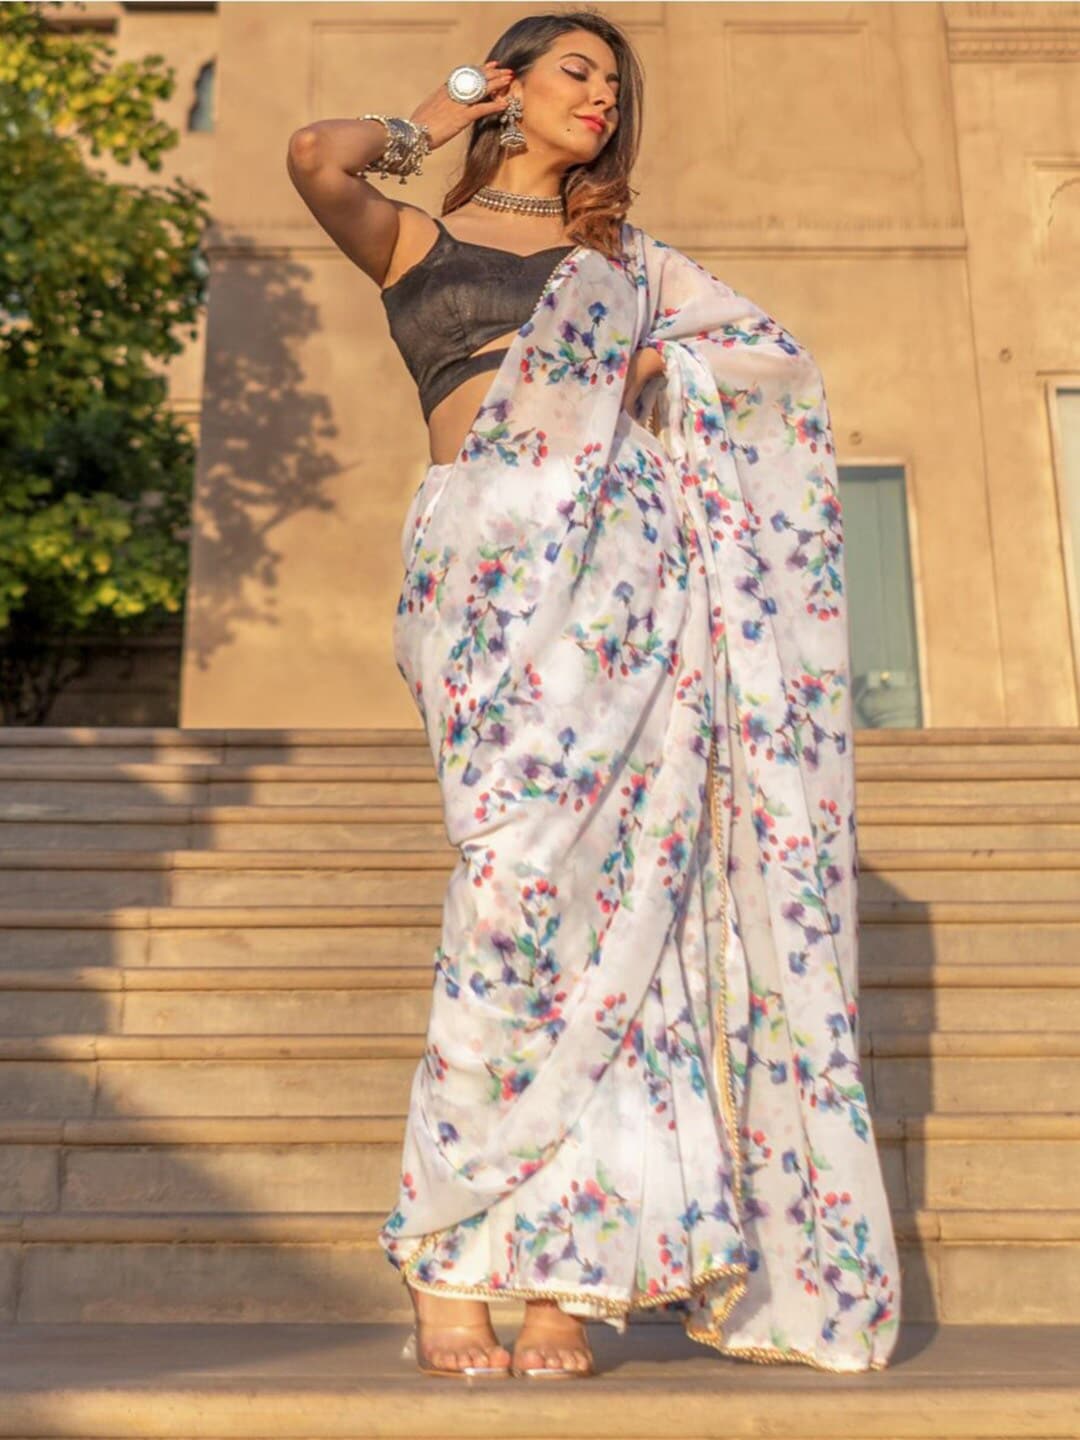 Top 25 options on floral saree blouse designs - Baggout